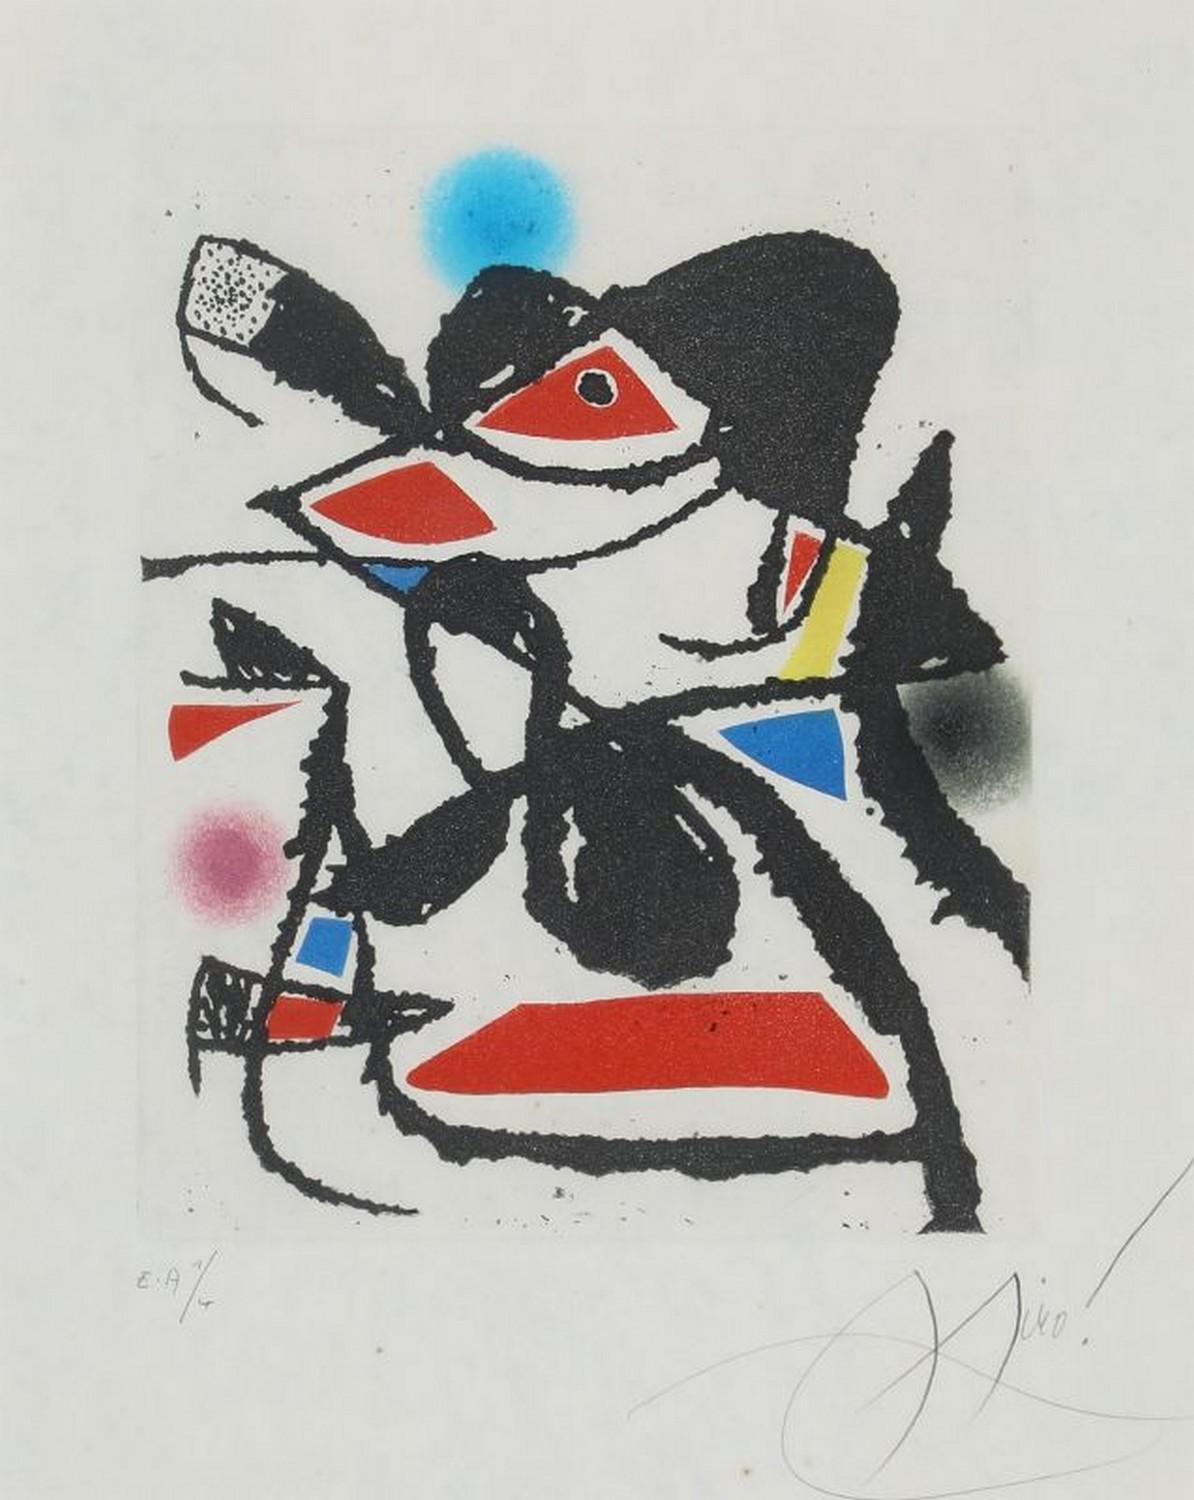 Abstract Print Joan Miró - Le marteau sans maître 